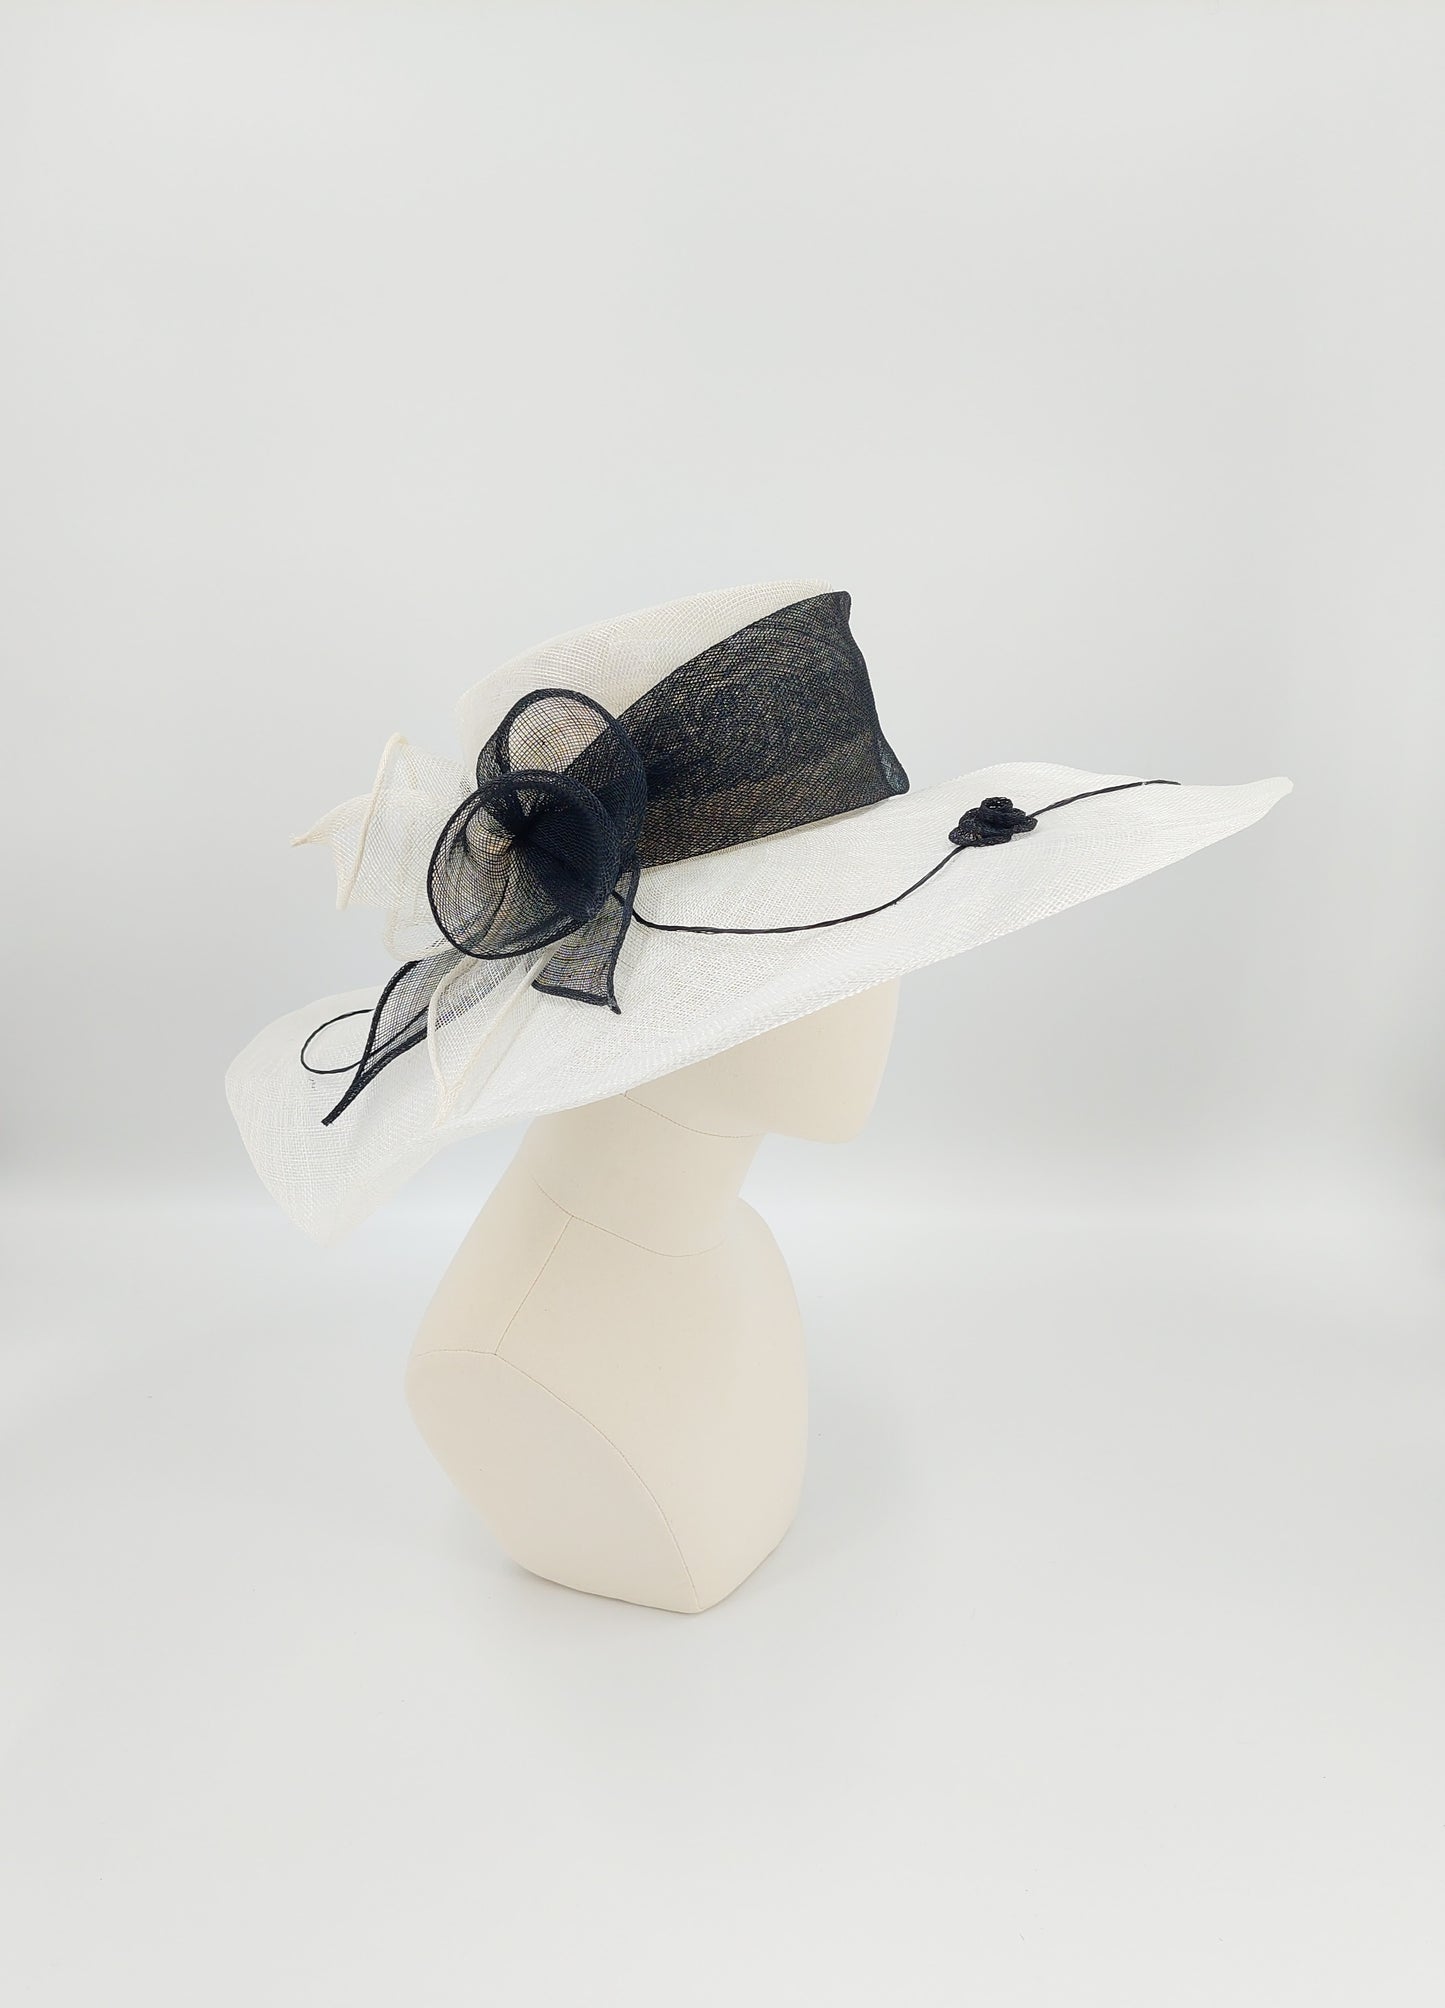 Hat Haven Millinery - custom hats, Derby hats, best derby hats, milliner, hat maker in Louisville, derby hats Louisville, Kentucky Derby hats, dress hats, church hats, ladies hats, bridal hats, wedding hats, fascinators